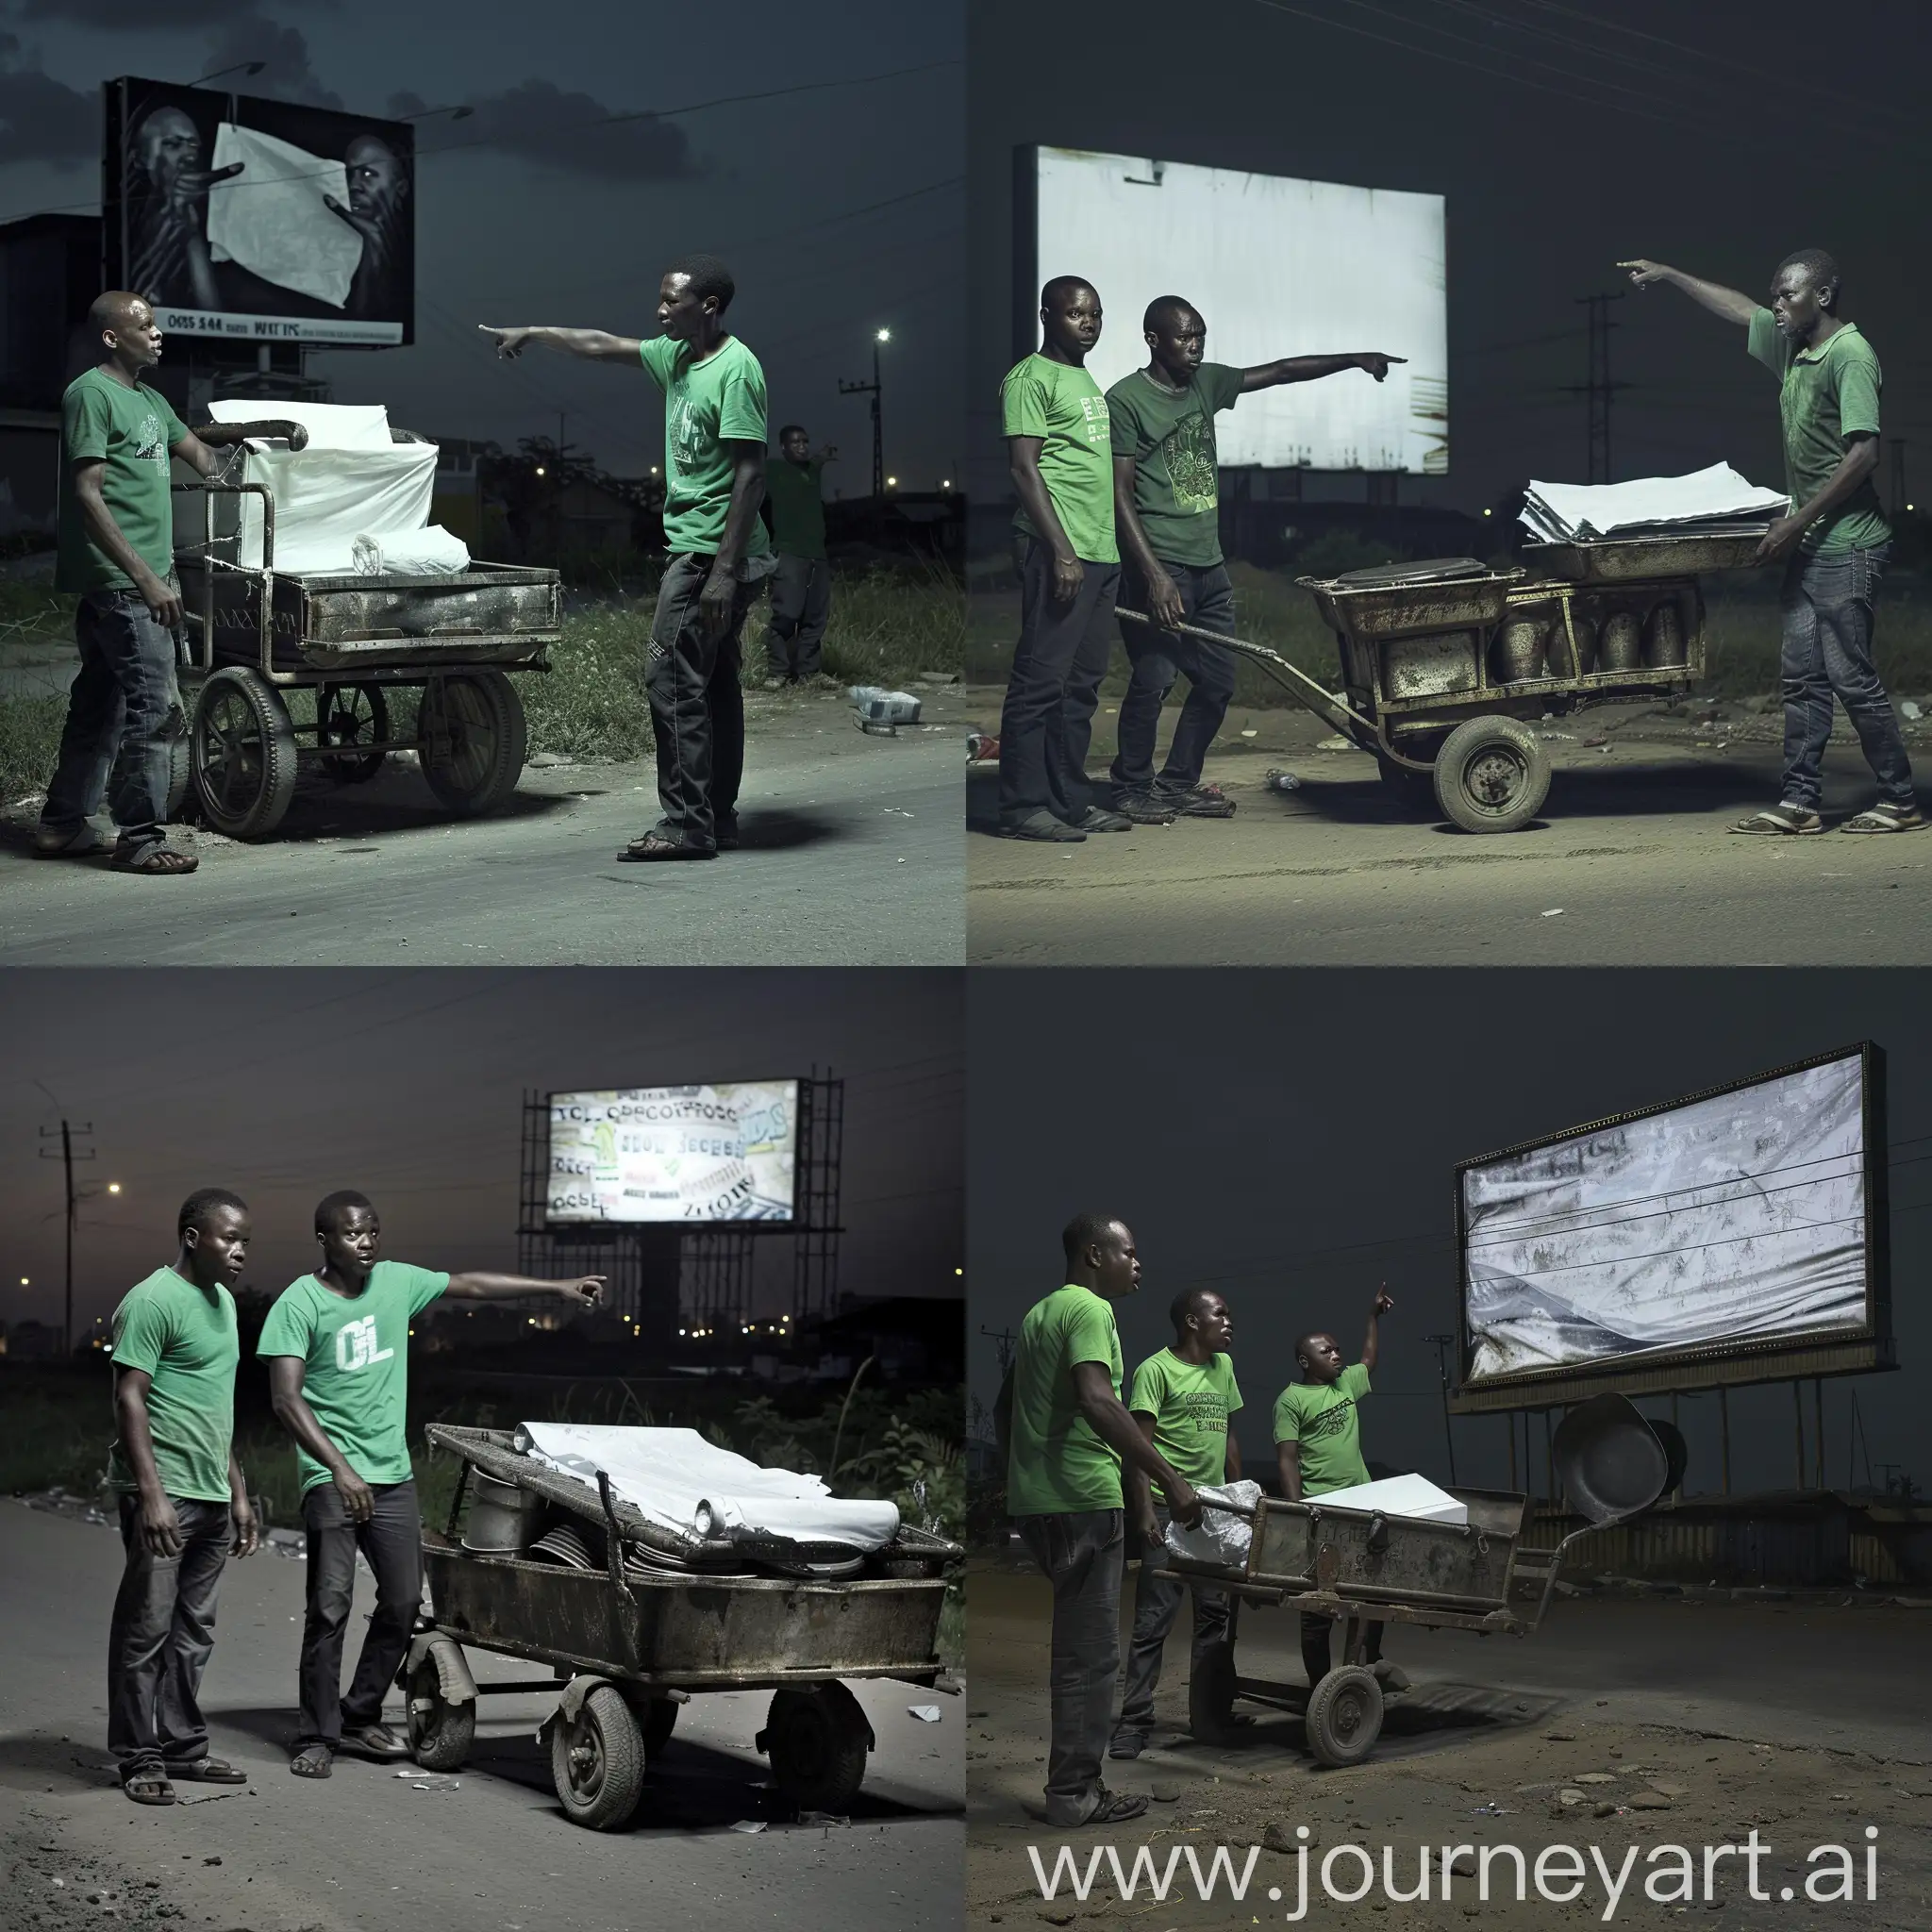 Nighttime-Scene-Nigerian-Pushtruck-Man-and-Two-Men-on-Street